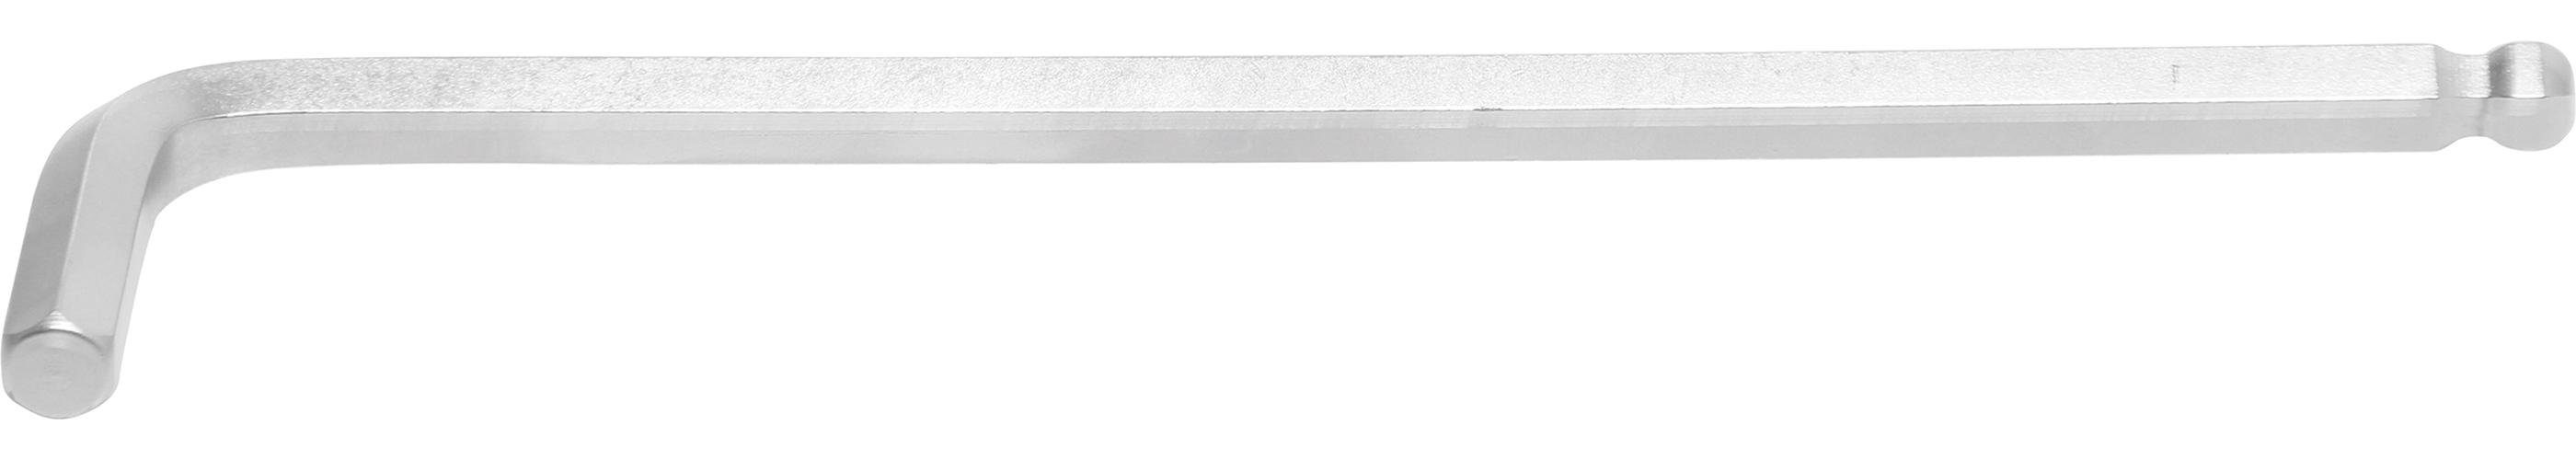 technic mm BGS lang, mit extra / Bit-Schraubendreher Innensechskant Kugelkopf Innensechskant Winkelschlüssel, 10